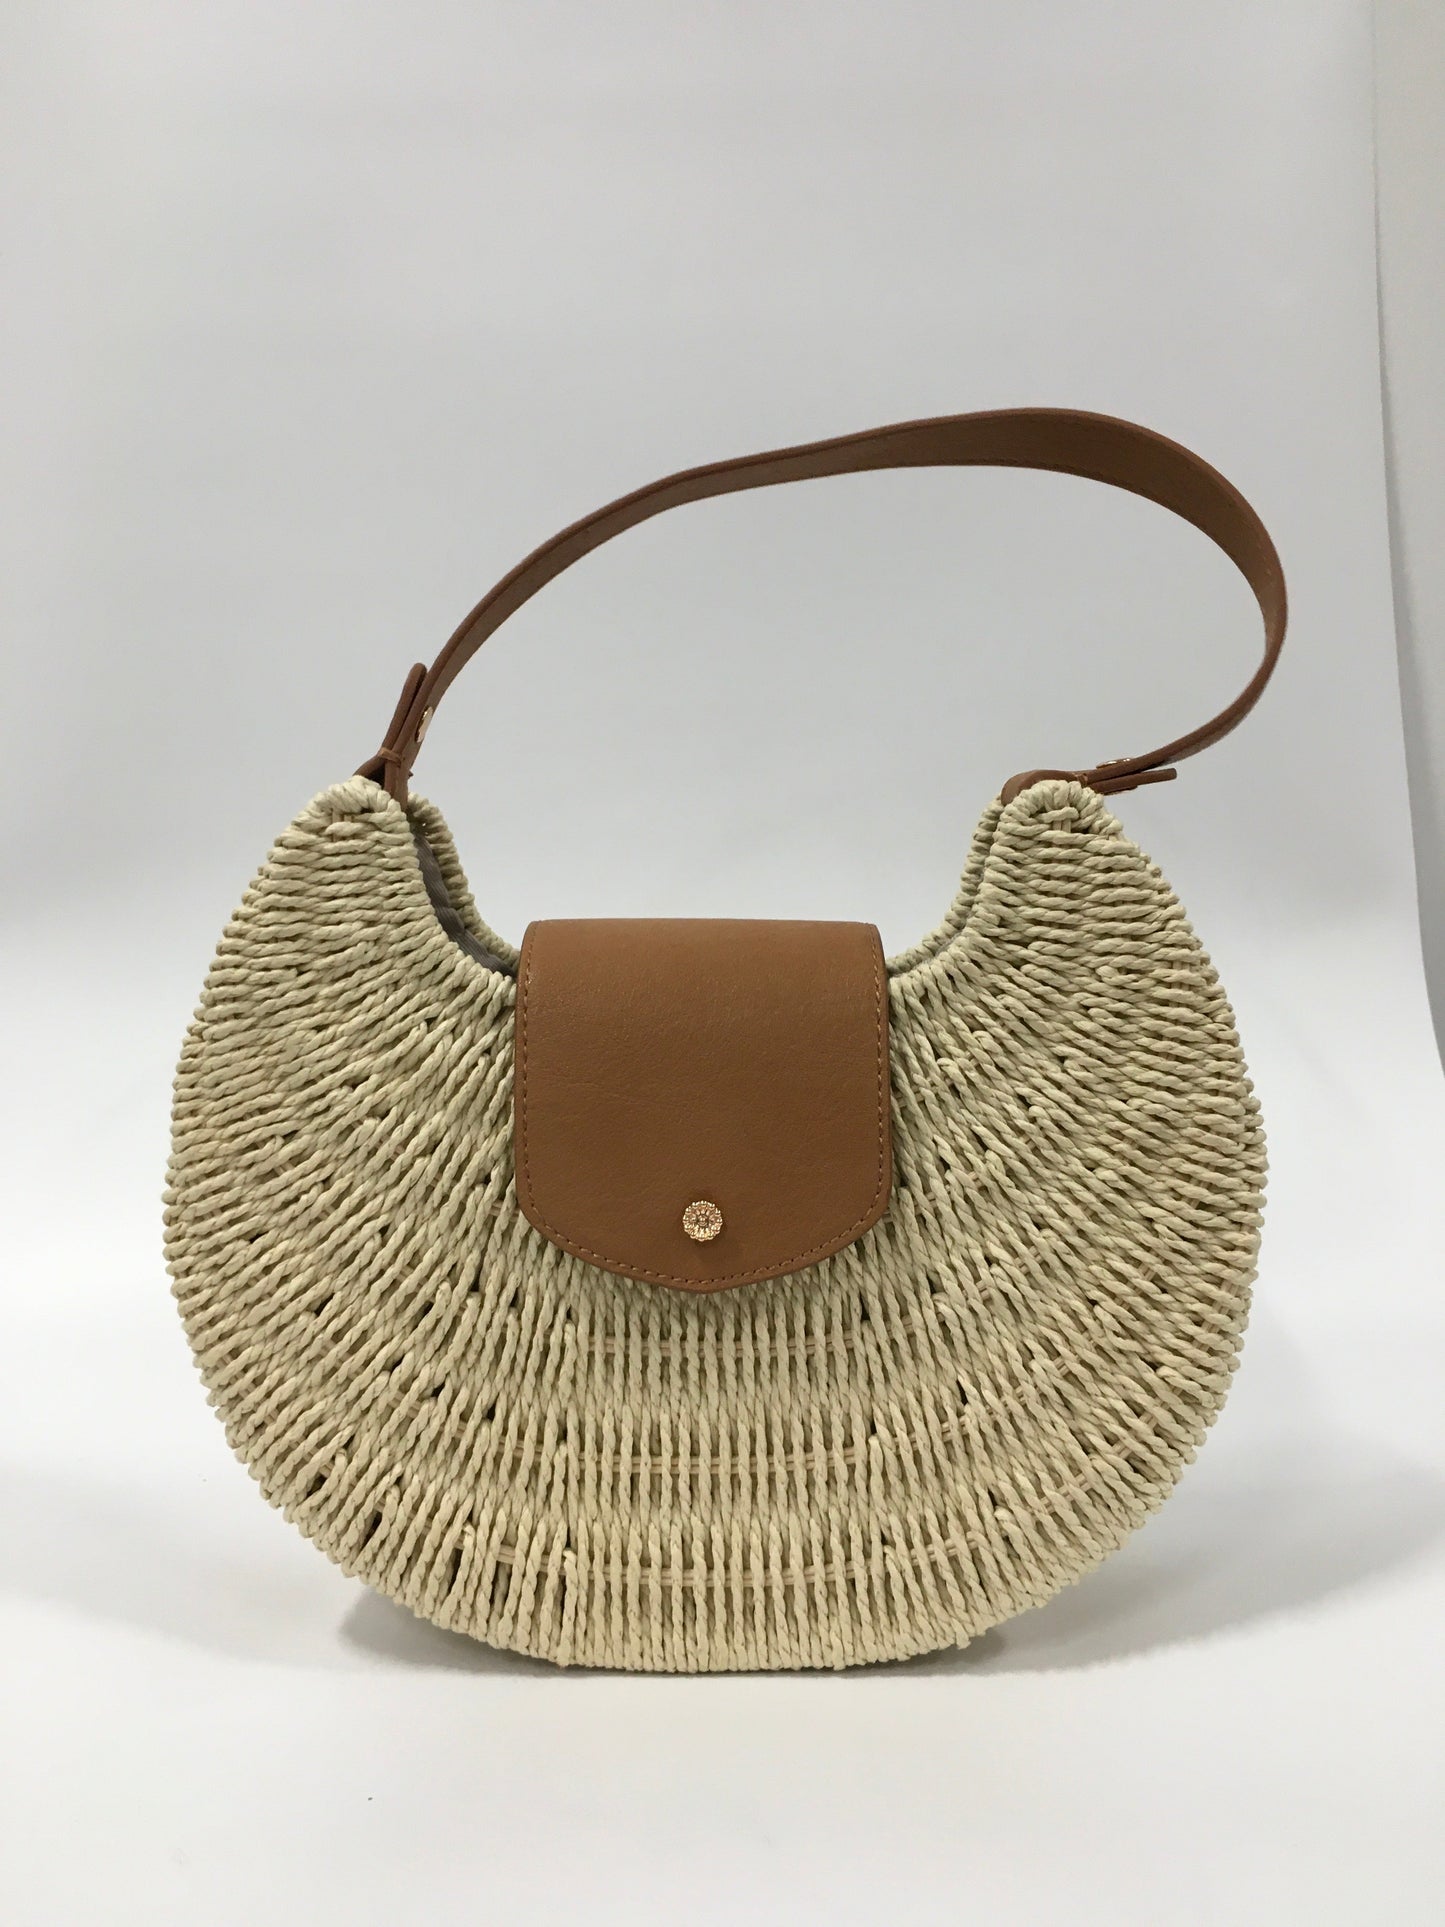 Handbag By Lc Lauren Conrad  Size: Medium